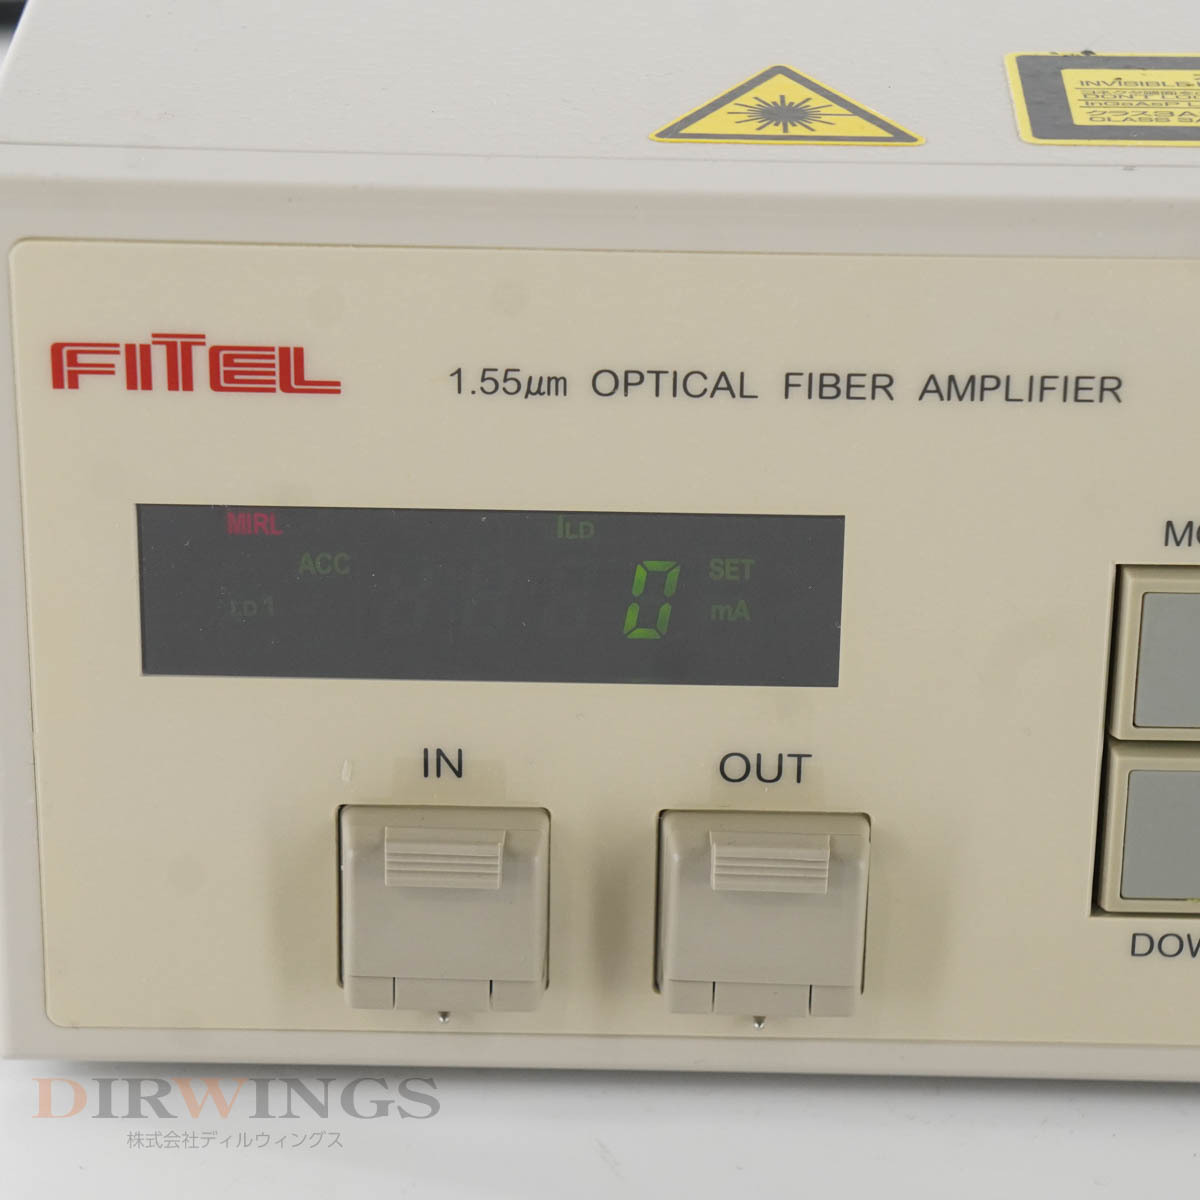 [DW] 8日保証 ErFA1316 FITEL FURUKAWA 古河電工 1.55μm OPTICAL FIBER AMPLIFIER 光増幅器 光ファイバアンプ 鍵付[05791-0741]_画像4